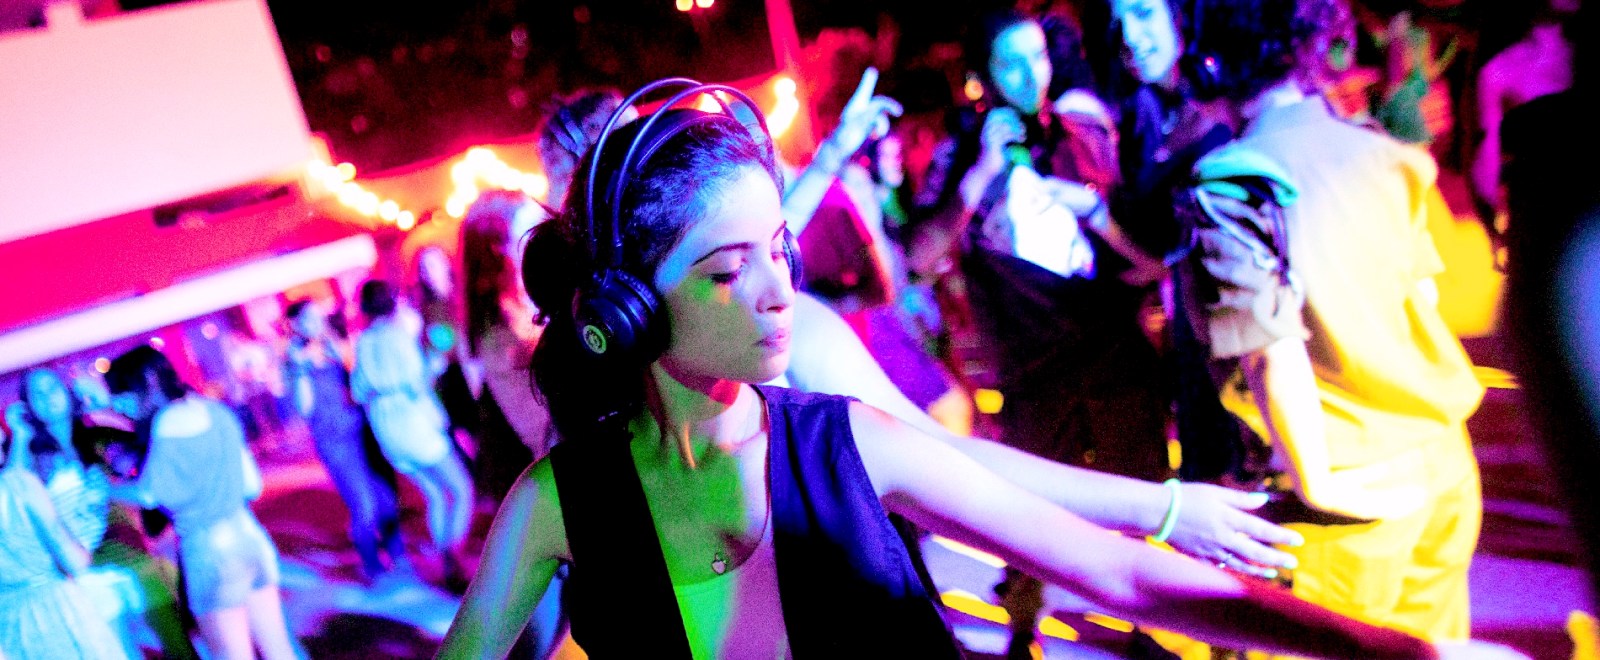 silent-disco-headphones-dancing-music-getty-full.jpg